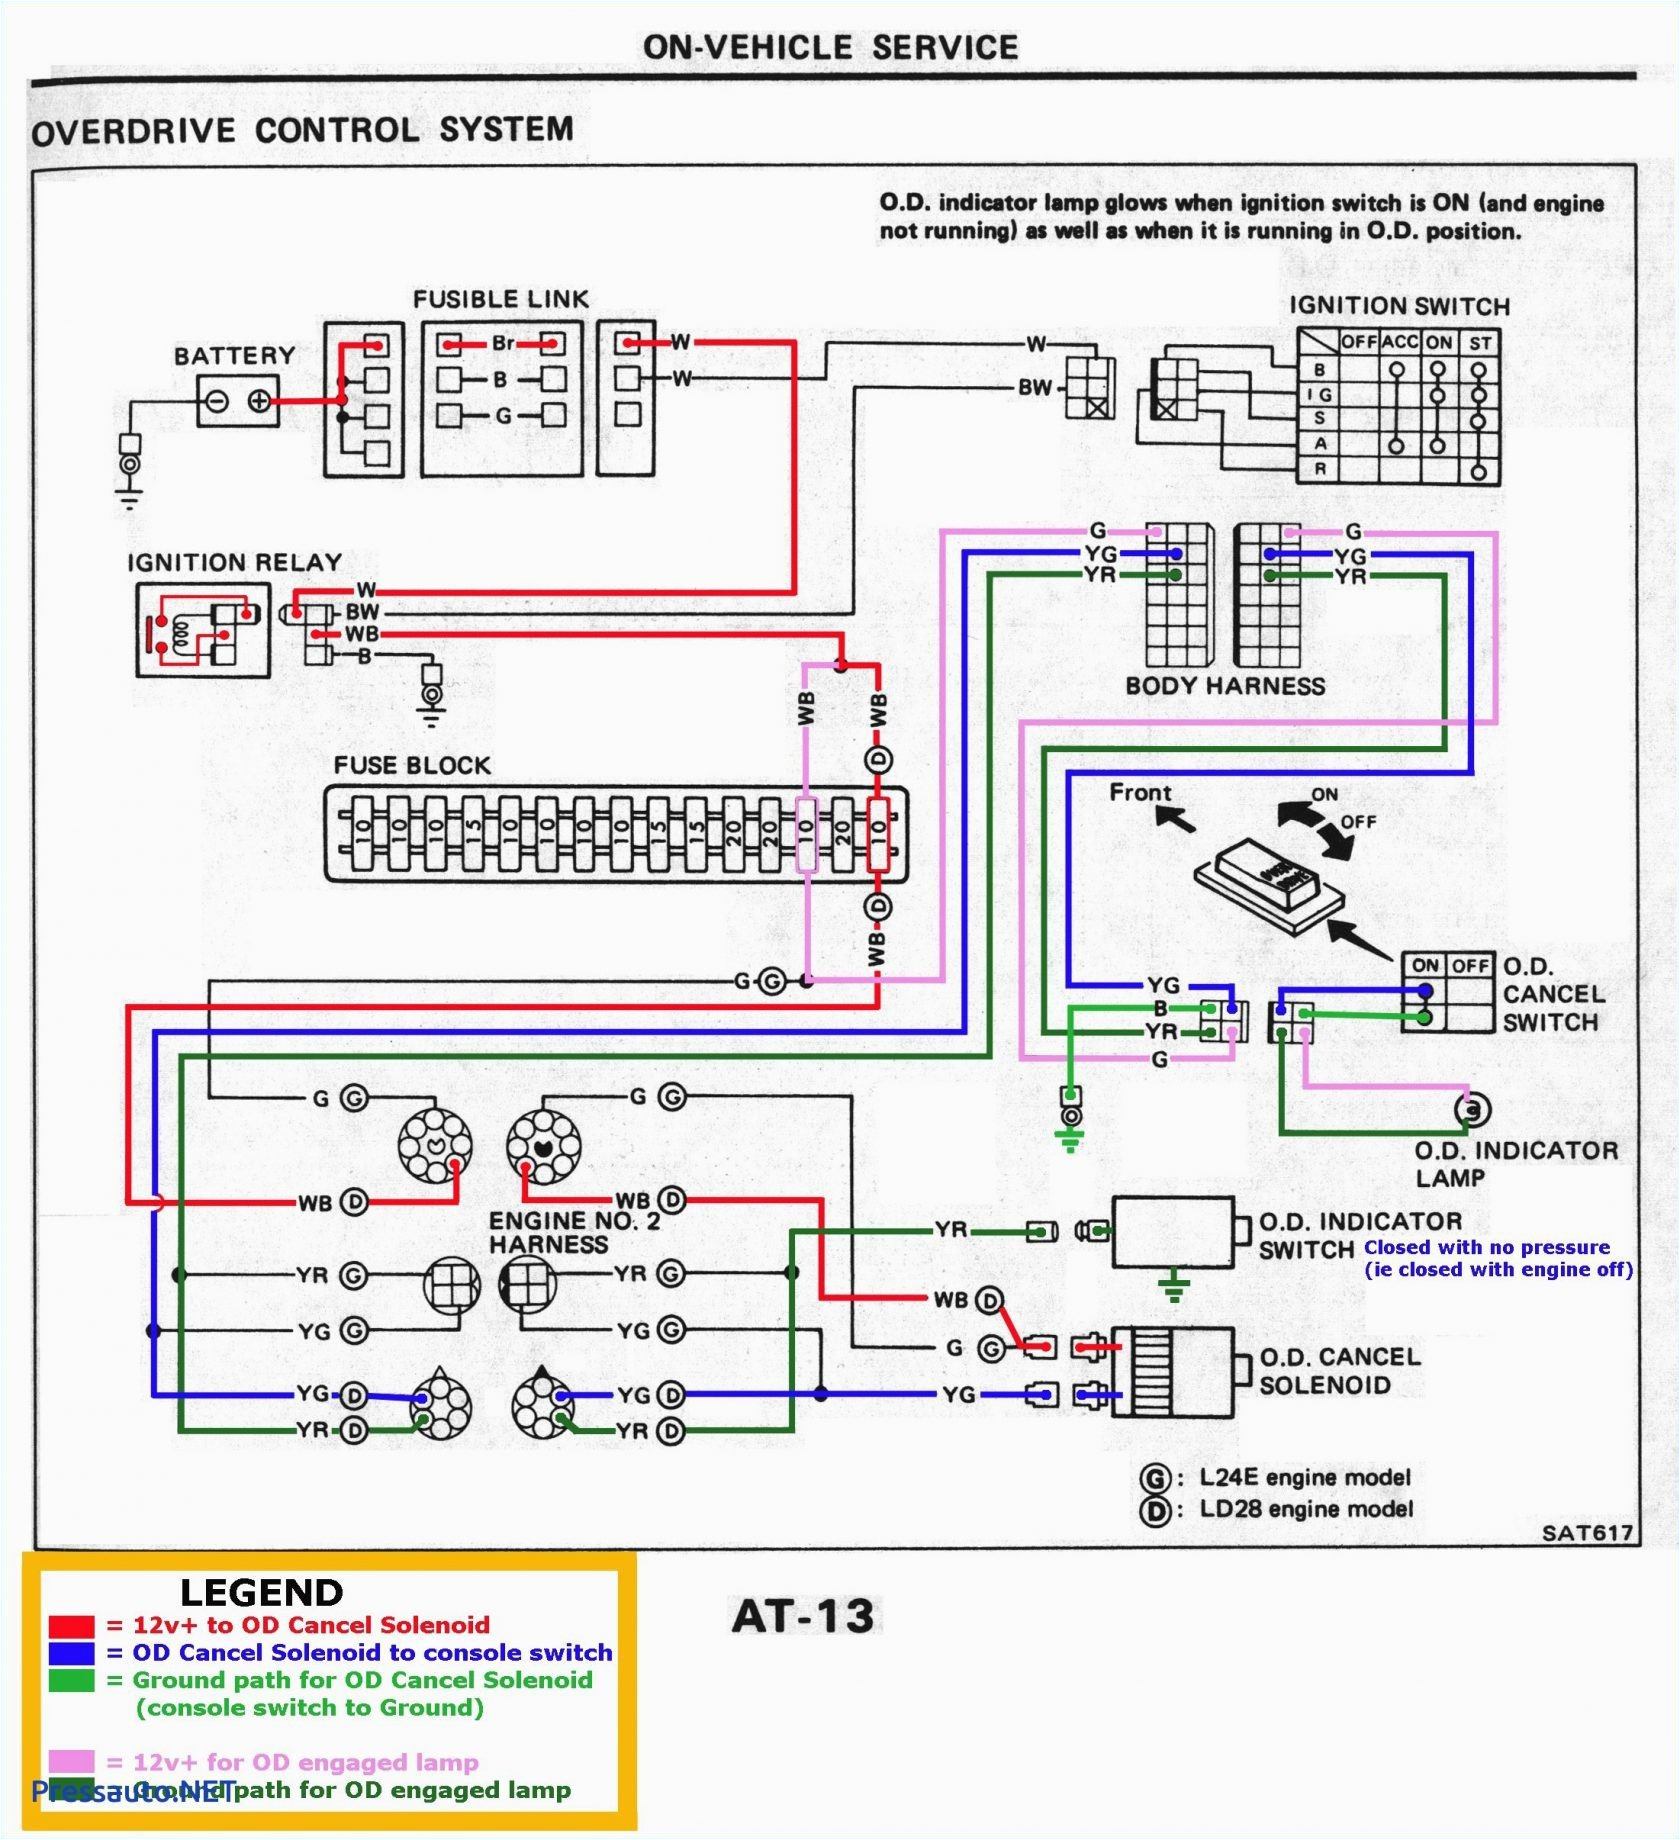 clark 530 wiring diagram wiring diagram expertclark tk wiring diagram advance wiring diagram clark 530 wiring